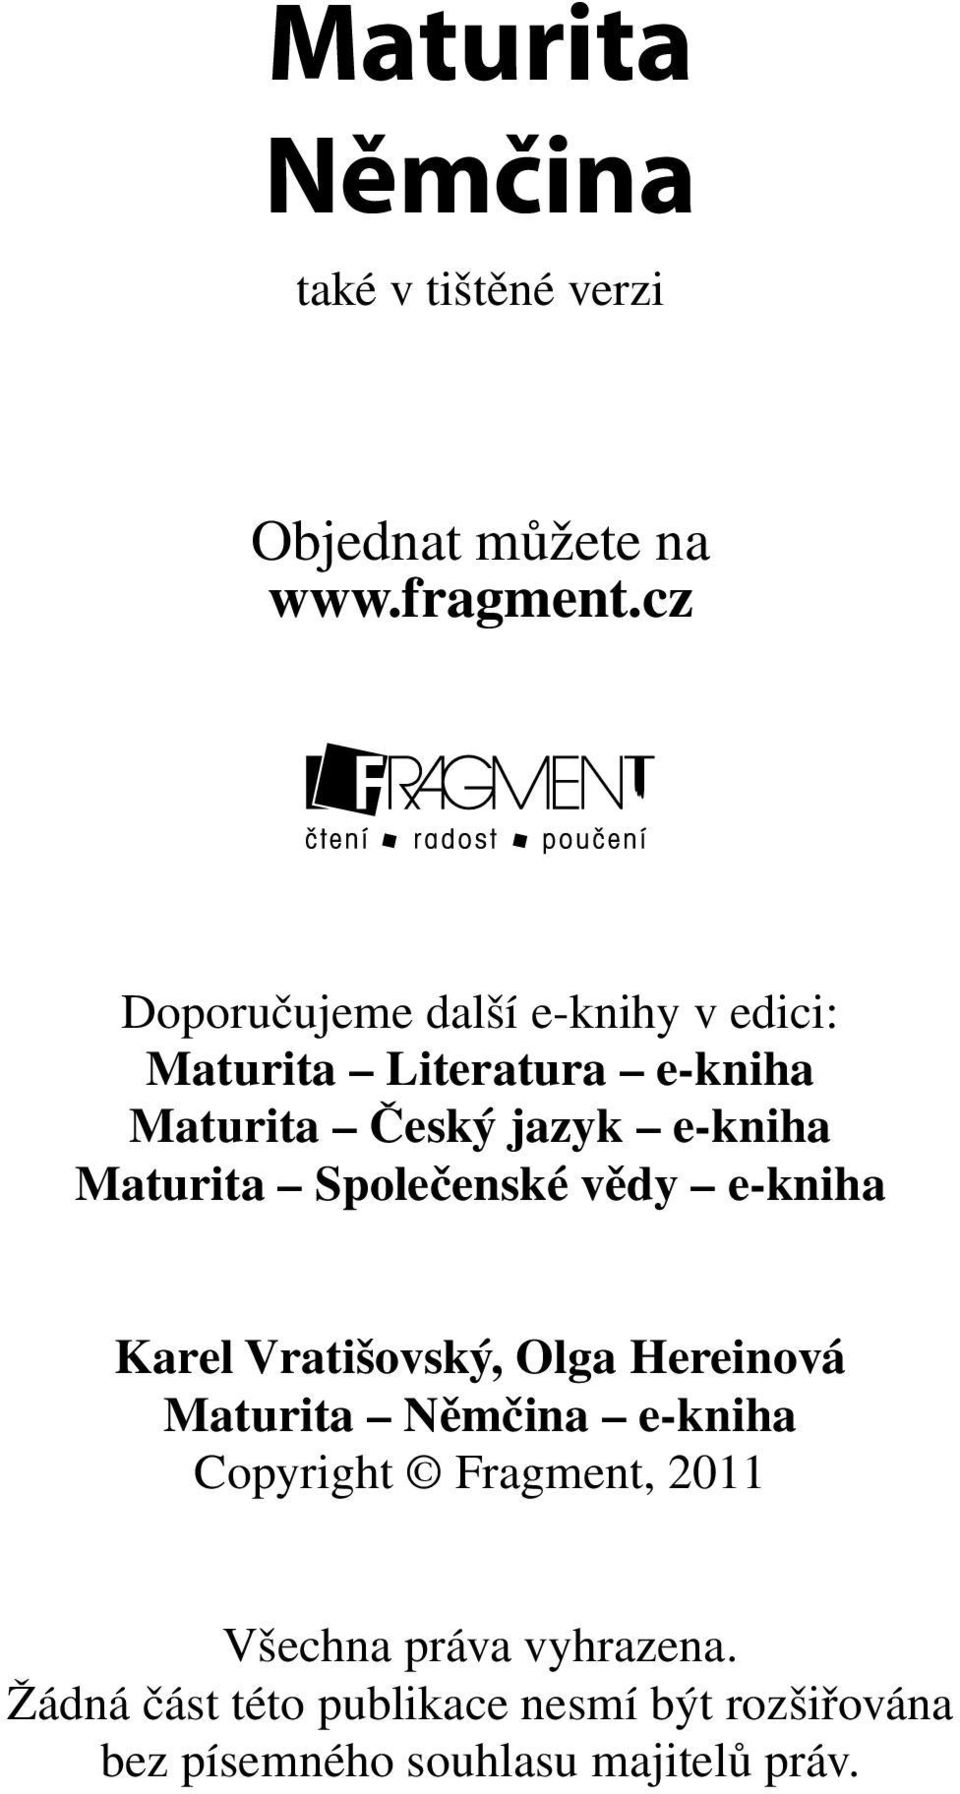 Maturita Společenské vědy e-kniha Karel Vratišovský, Olga Hereinová Maturita Němčina e-kniha